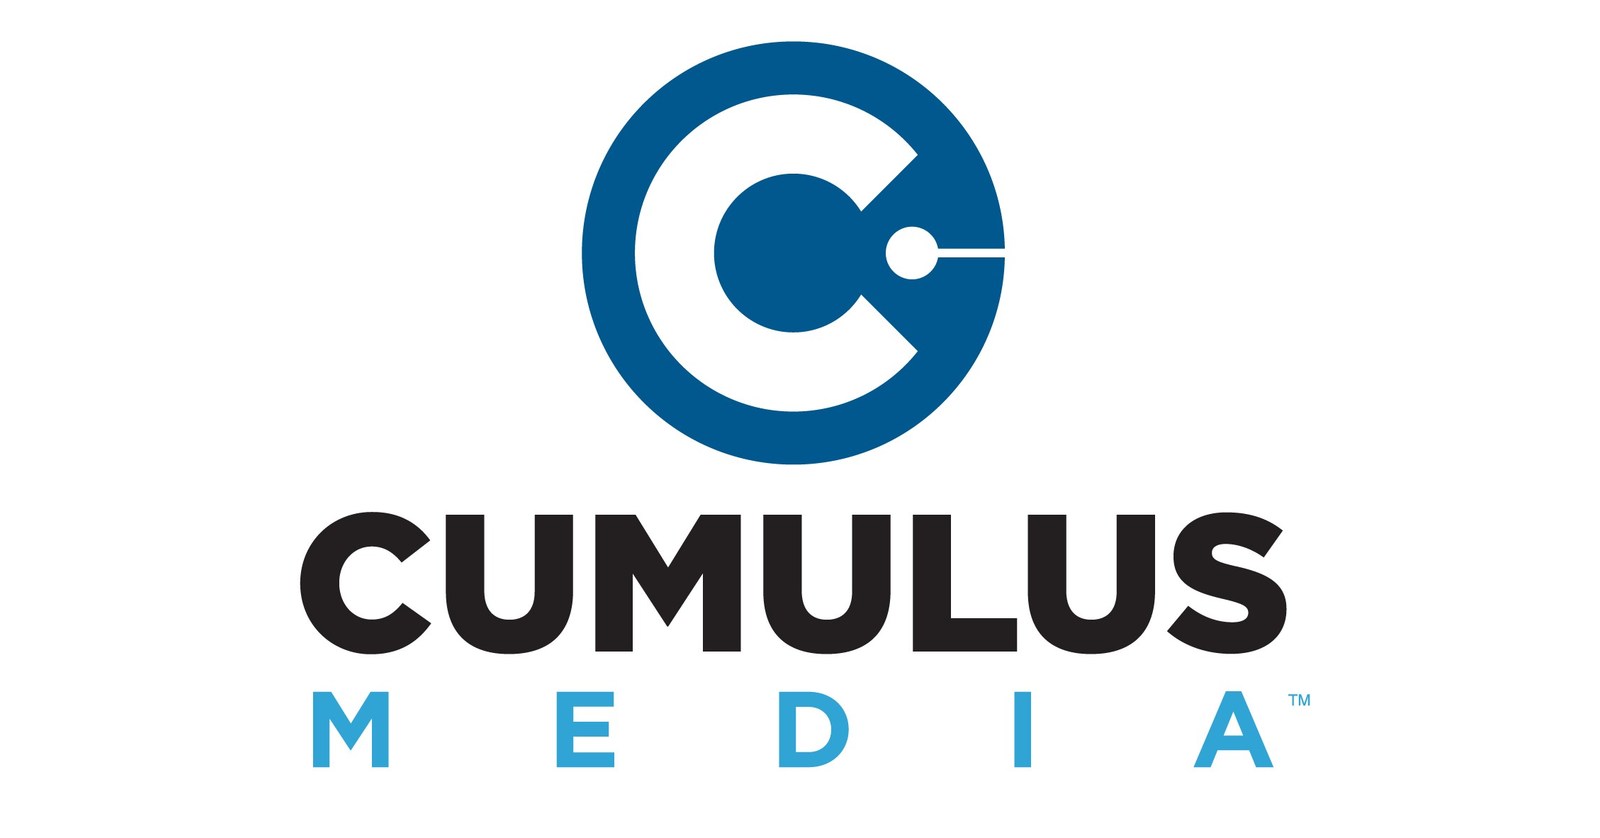 Network Solutions › Cumulus Media